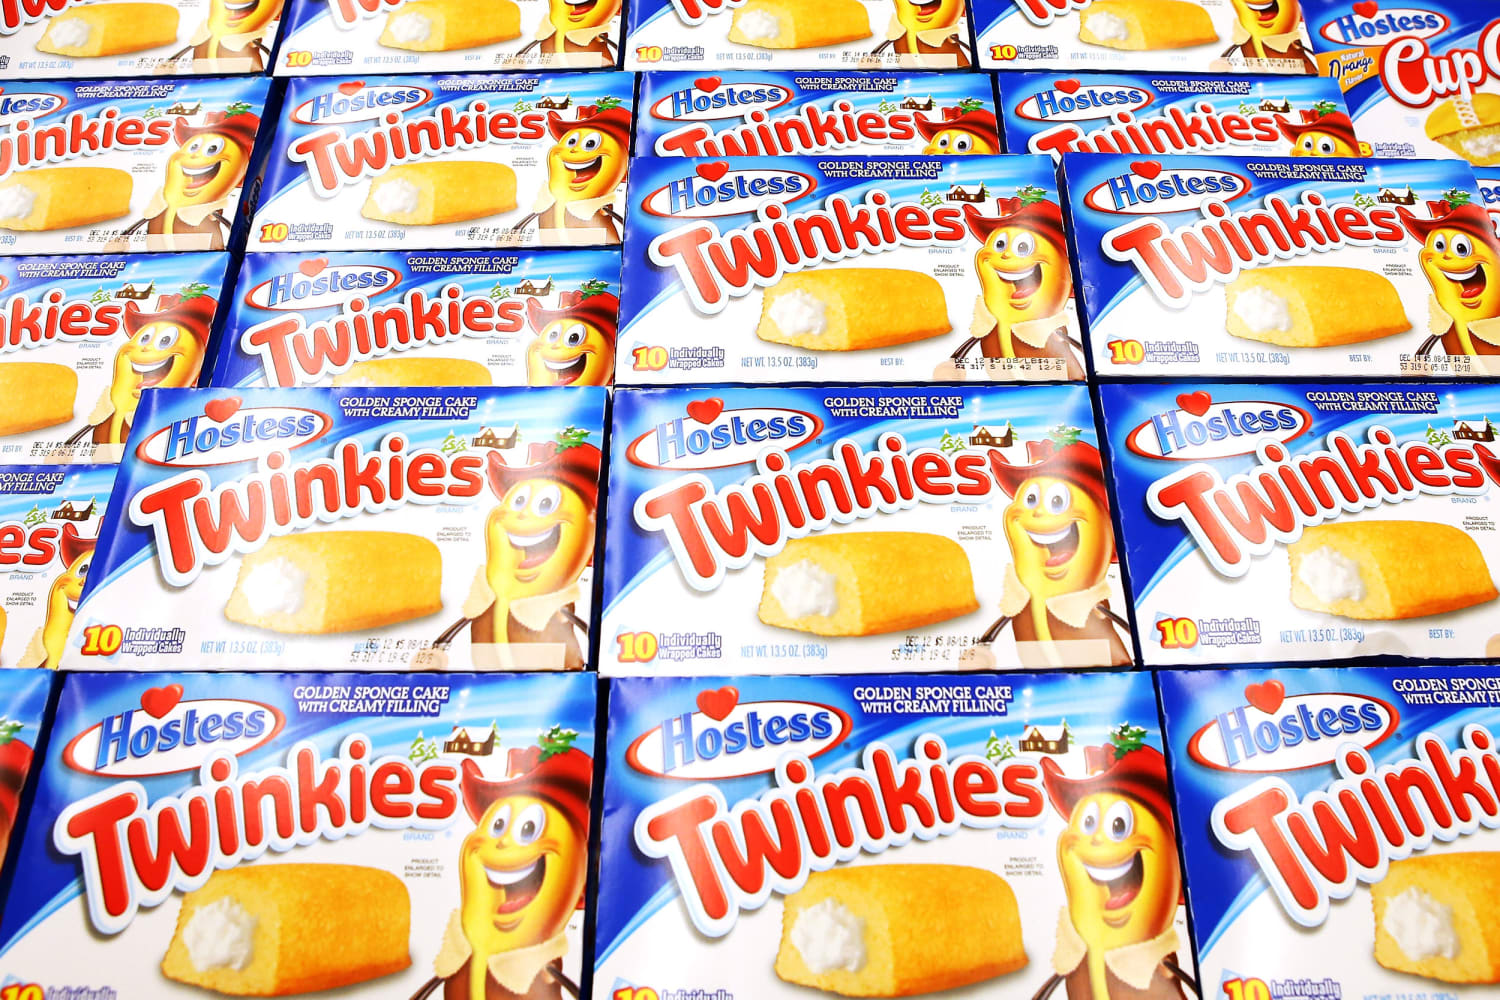 Smucker agrees to buy Twinkie maker Hostess Brands for $5.6 billion